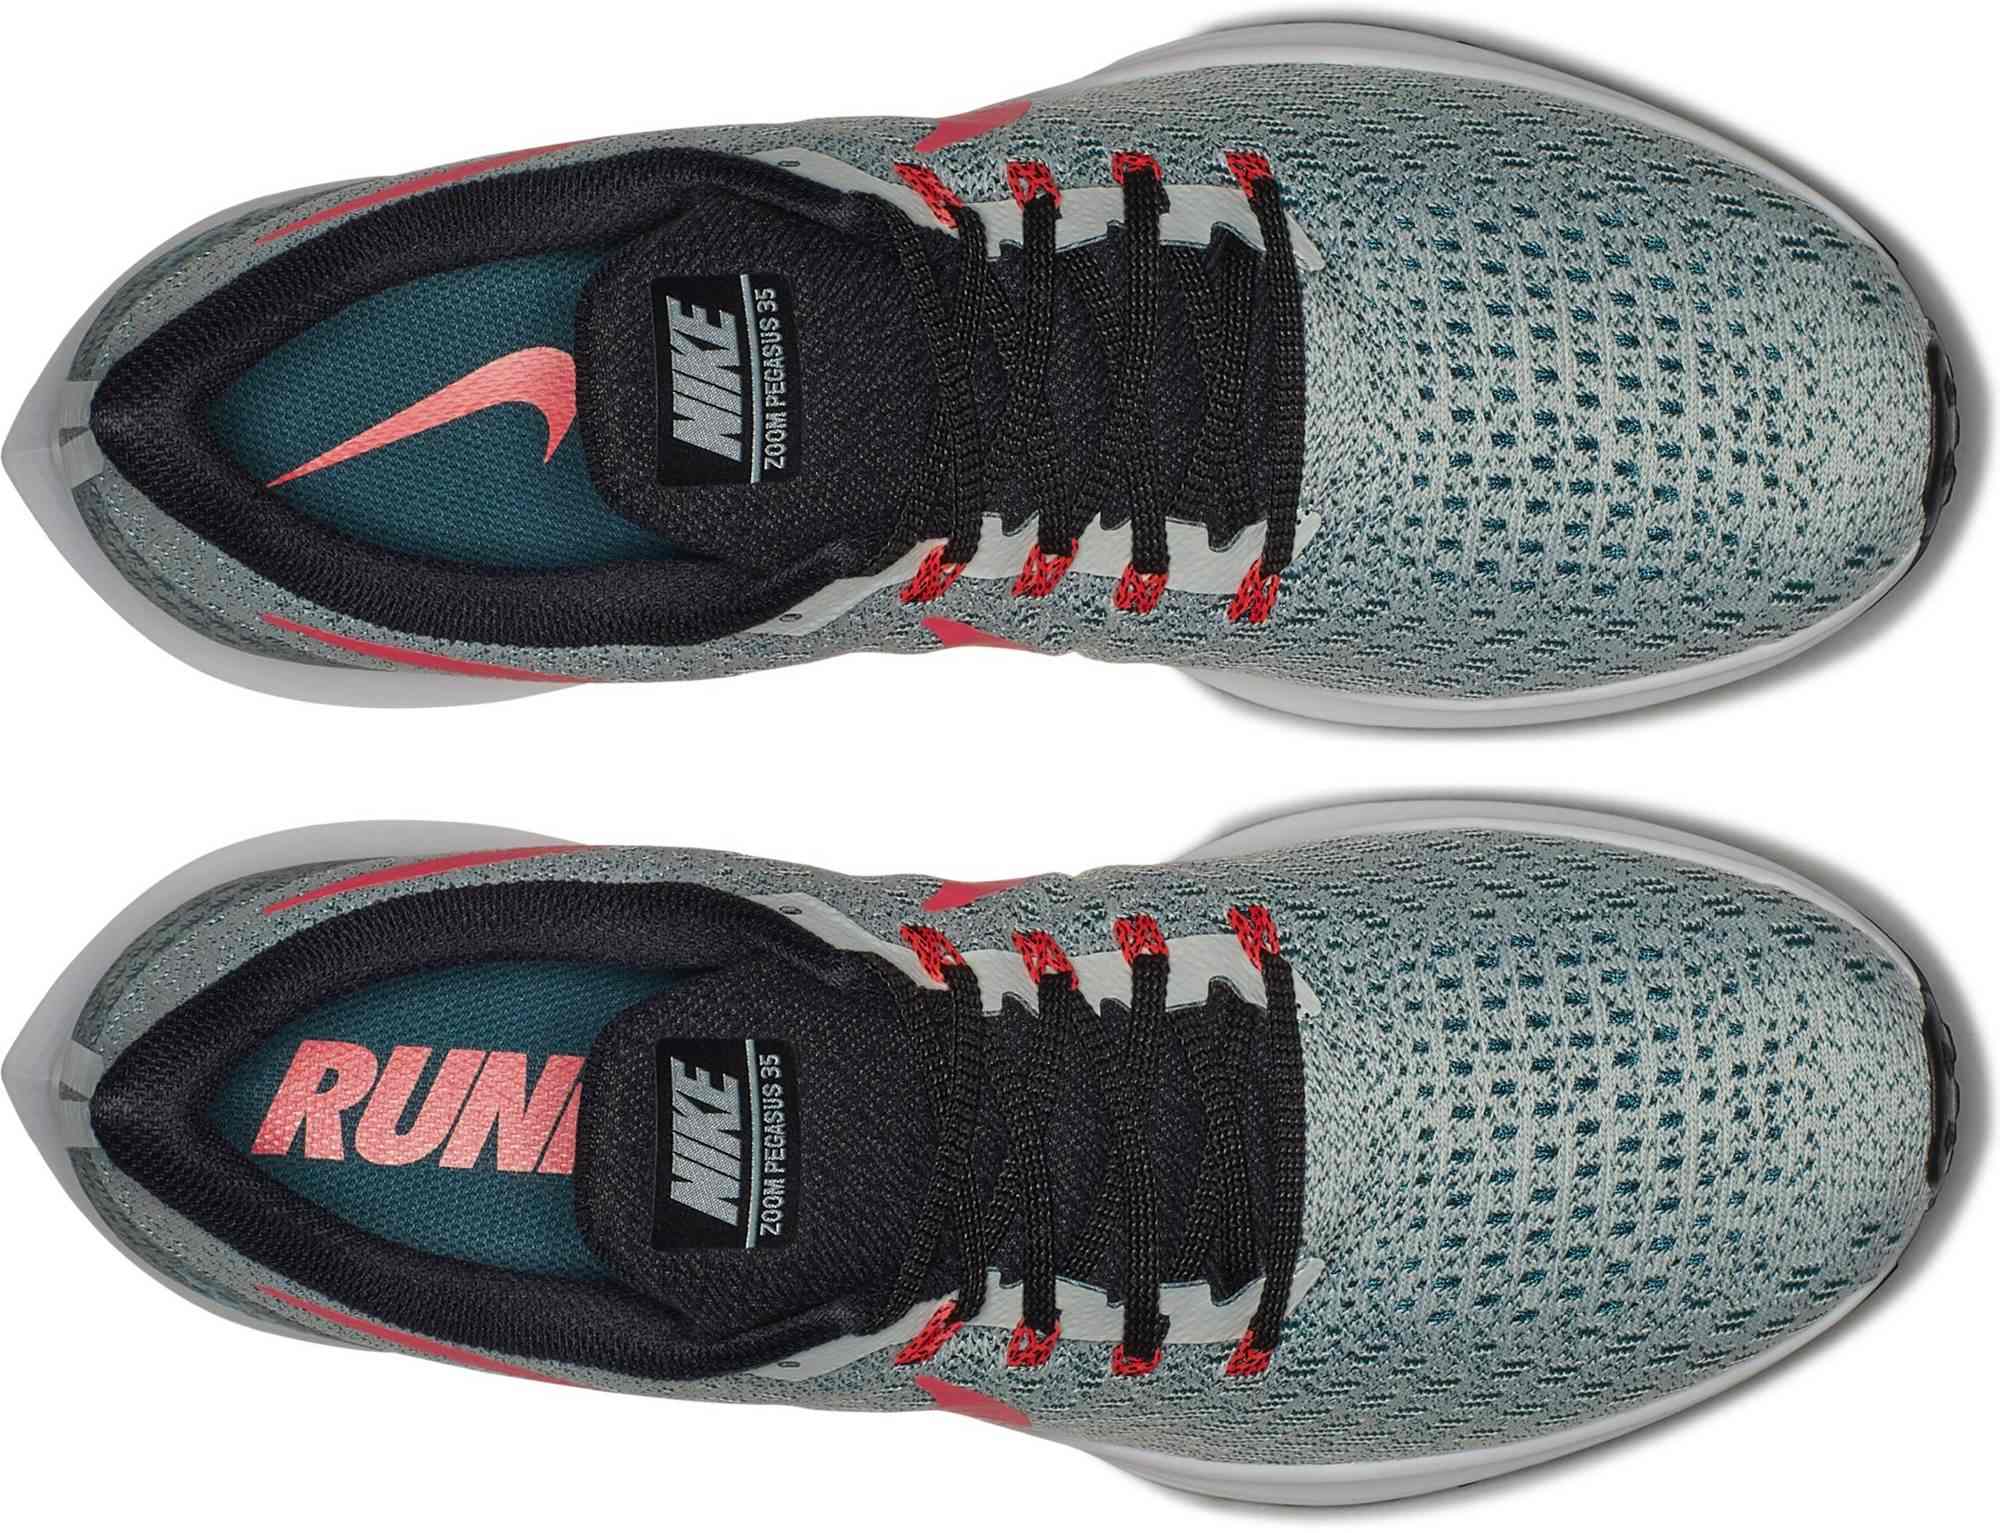 Men’s running shoes